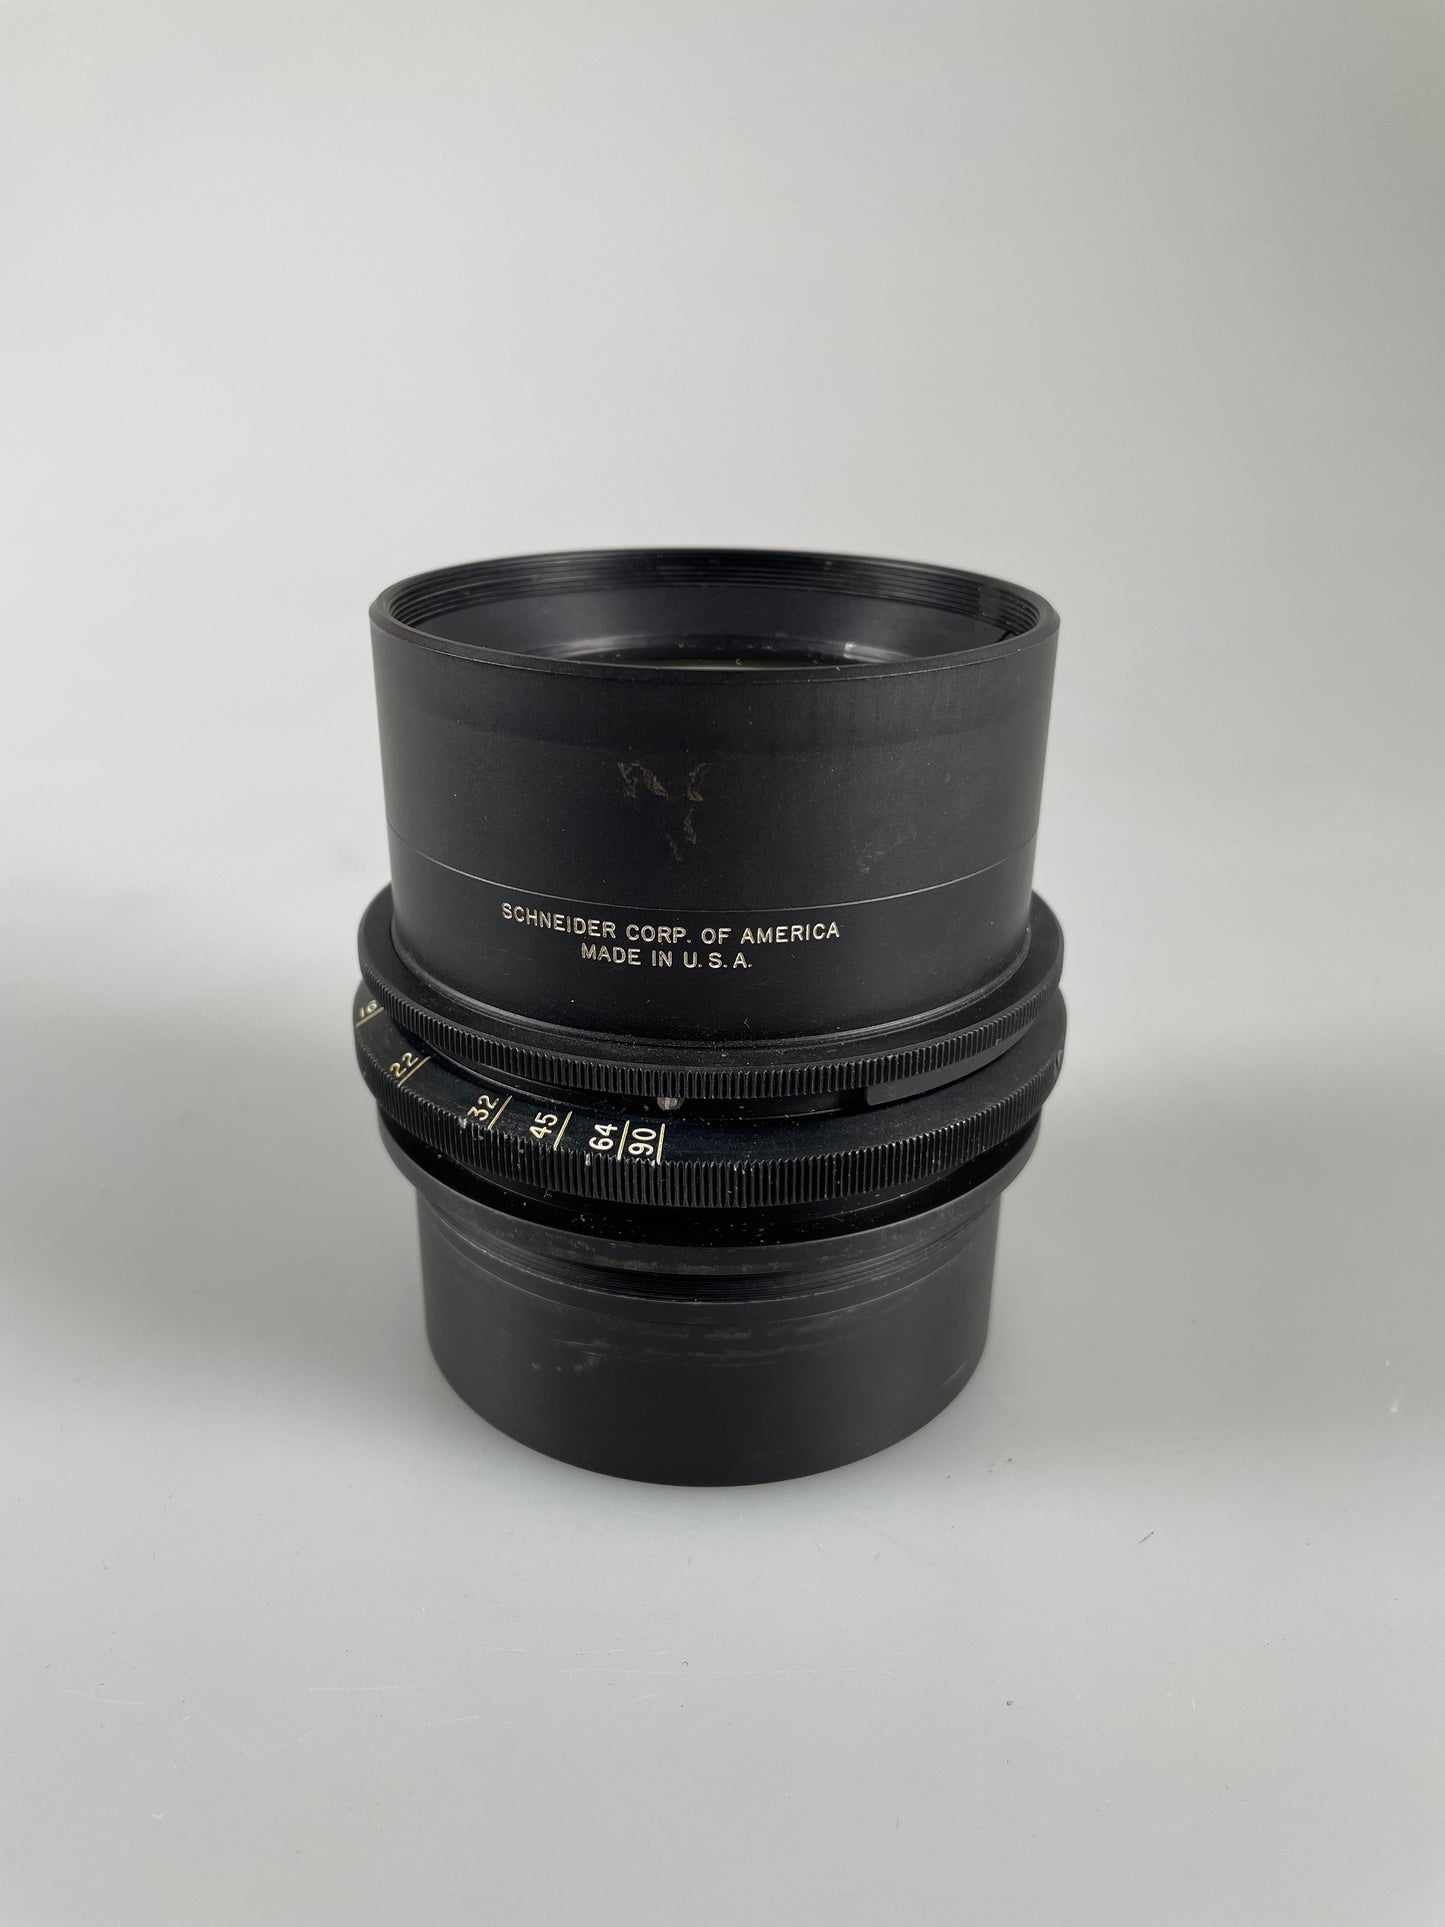 Goerz 30 inch f12.5 Apochromat Artar Barrel Lens Schneider red dot